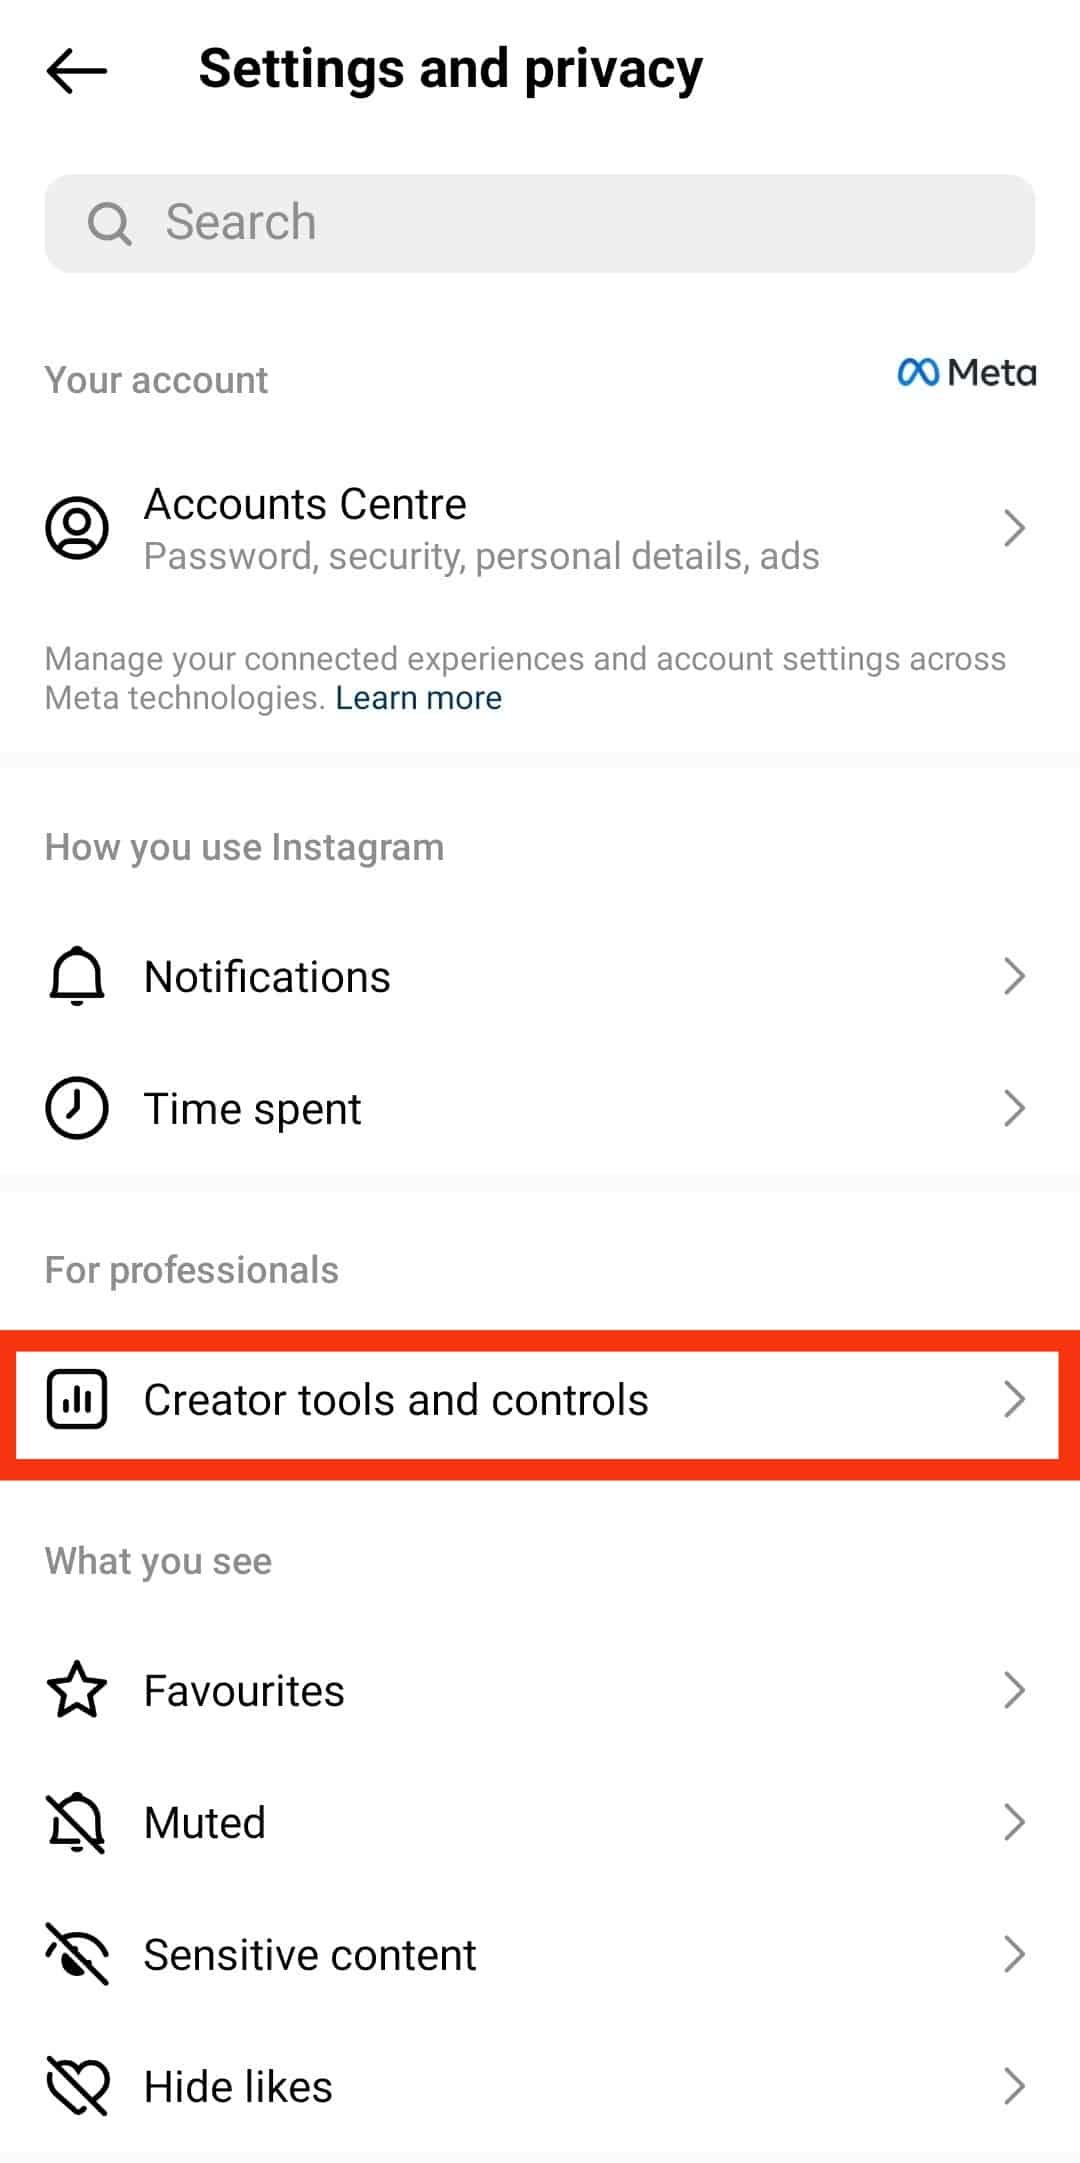 Select Creator Tools And Controls